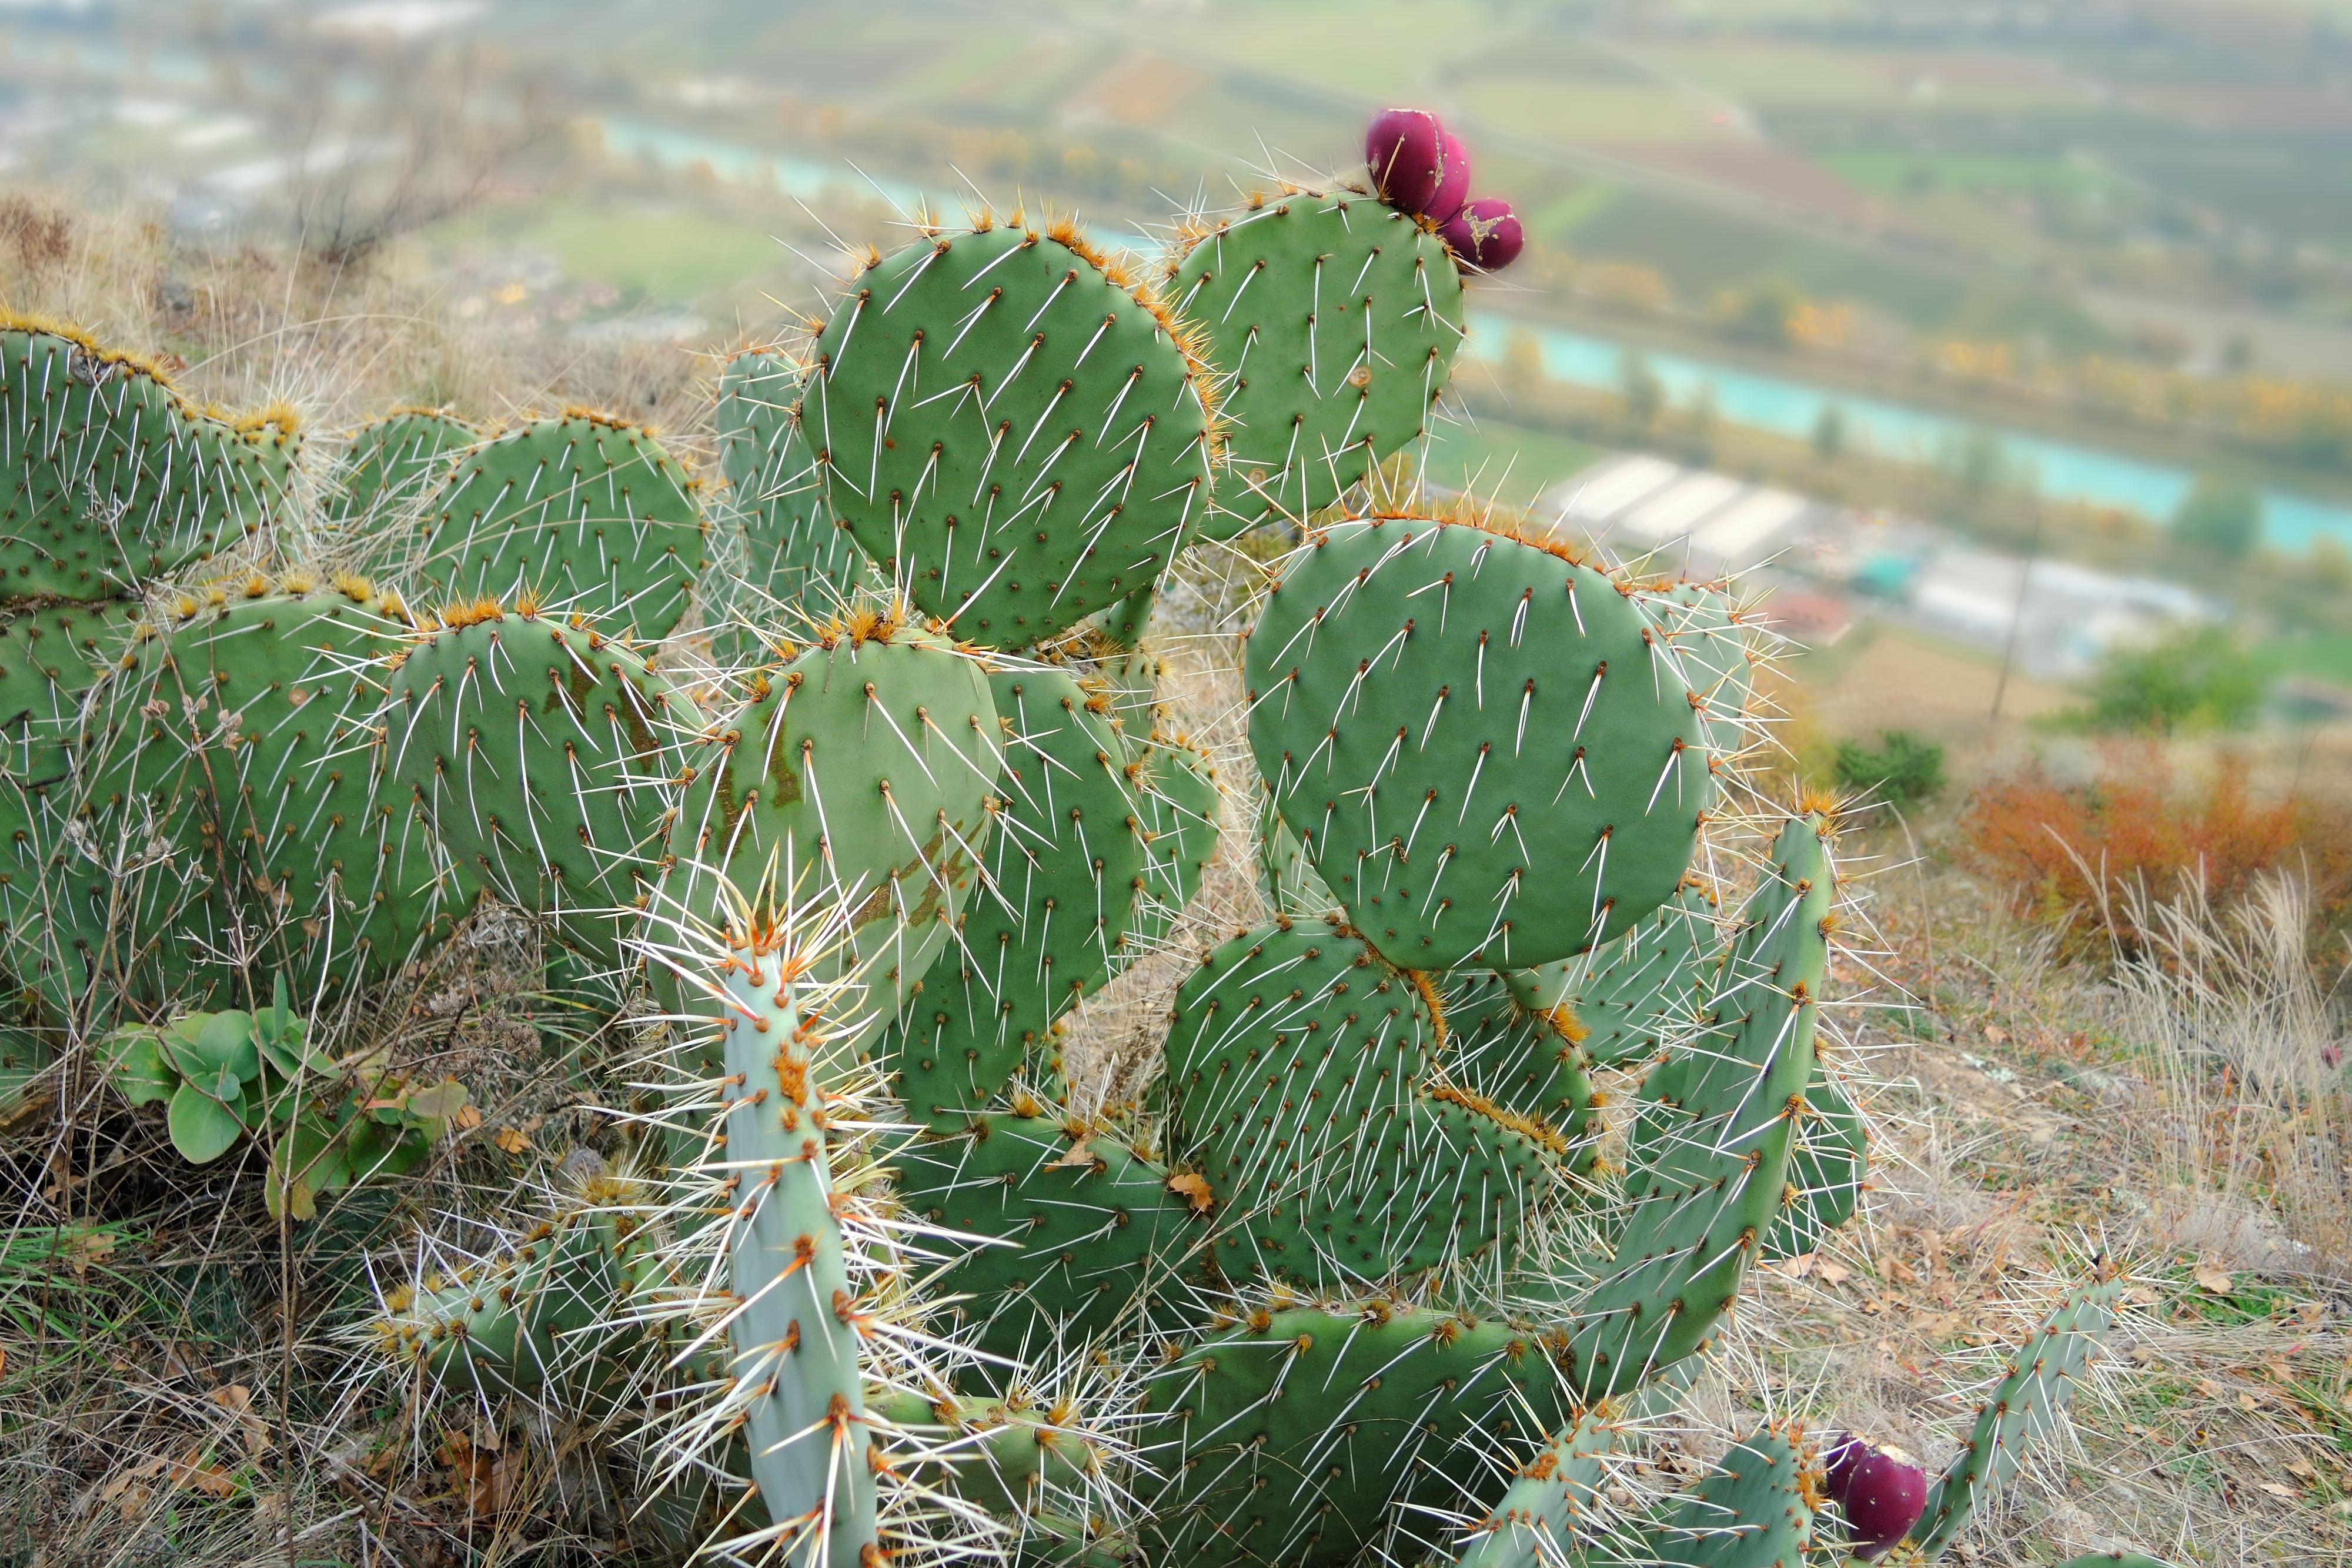 File:Cactuses.jpg - Wikimedia Commons